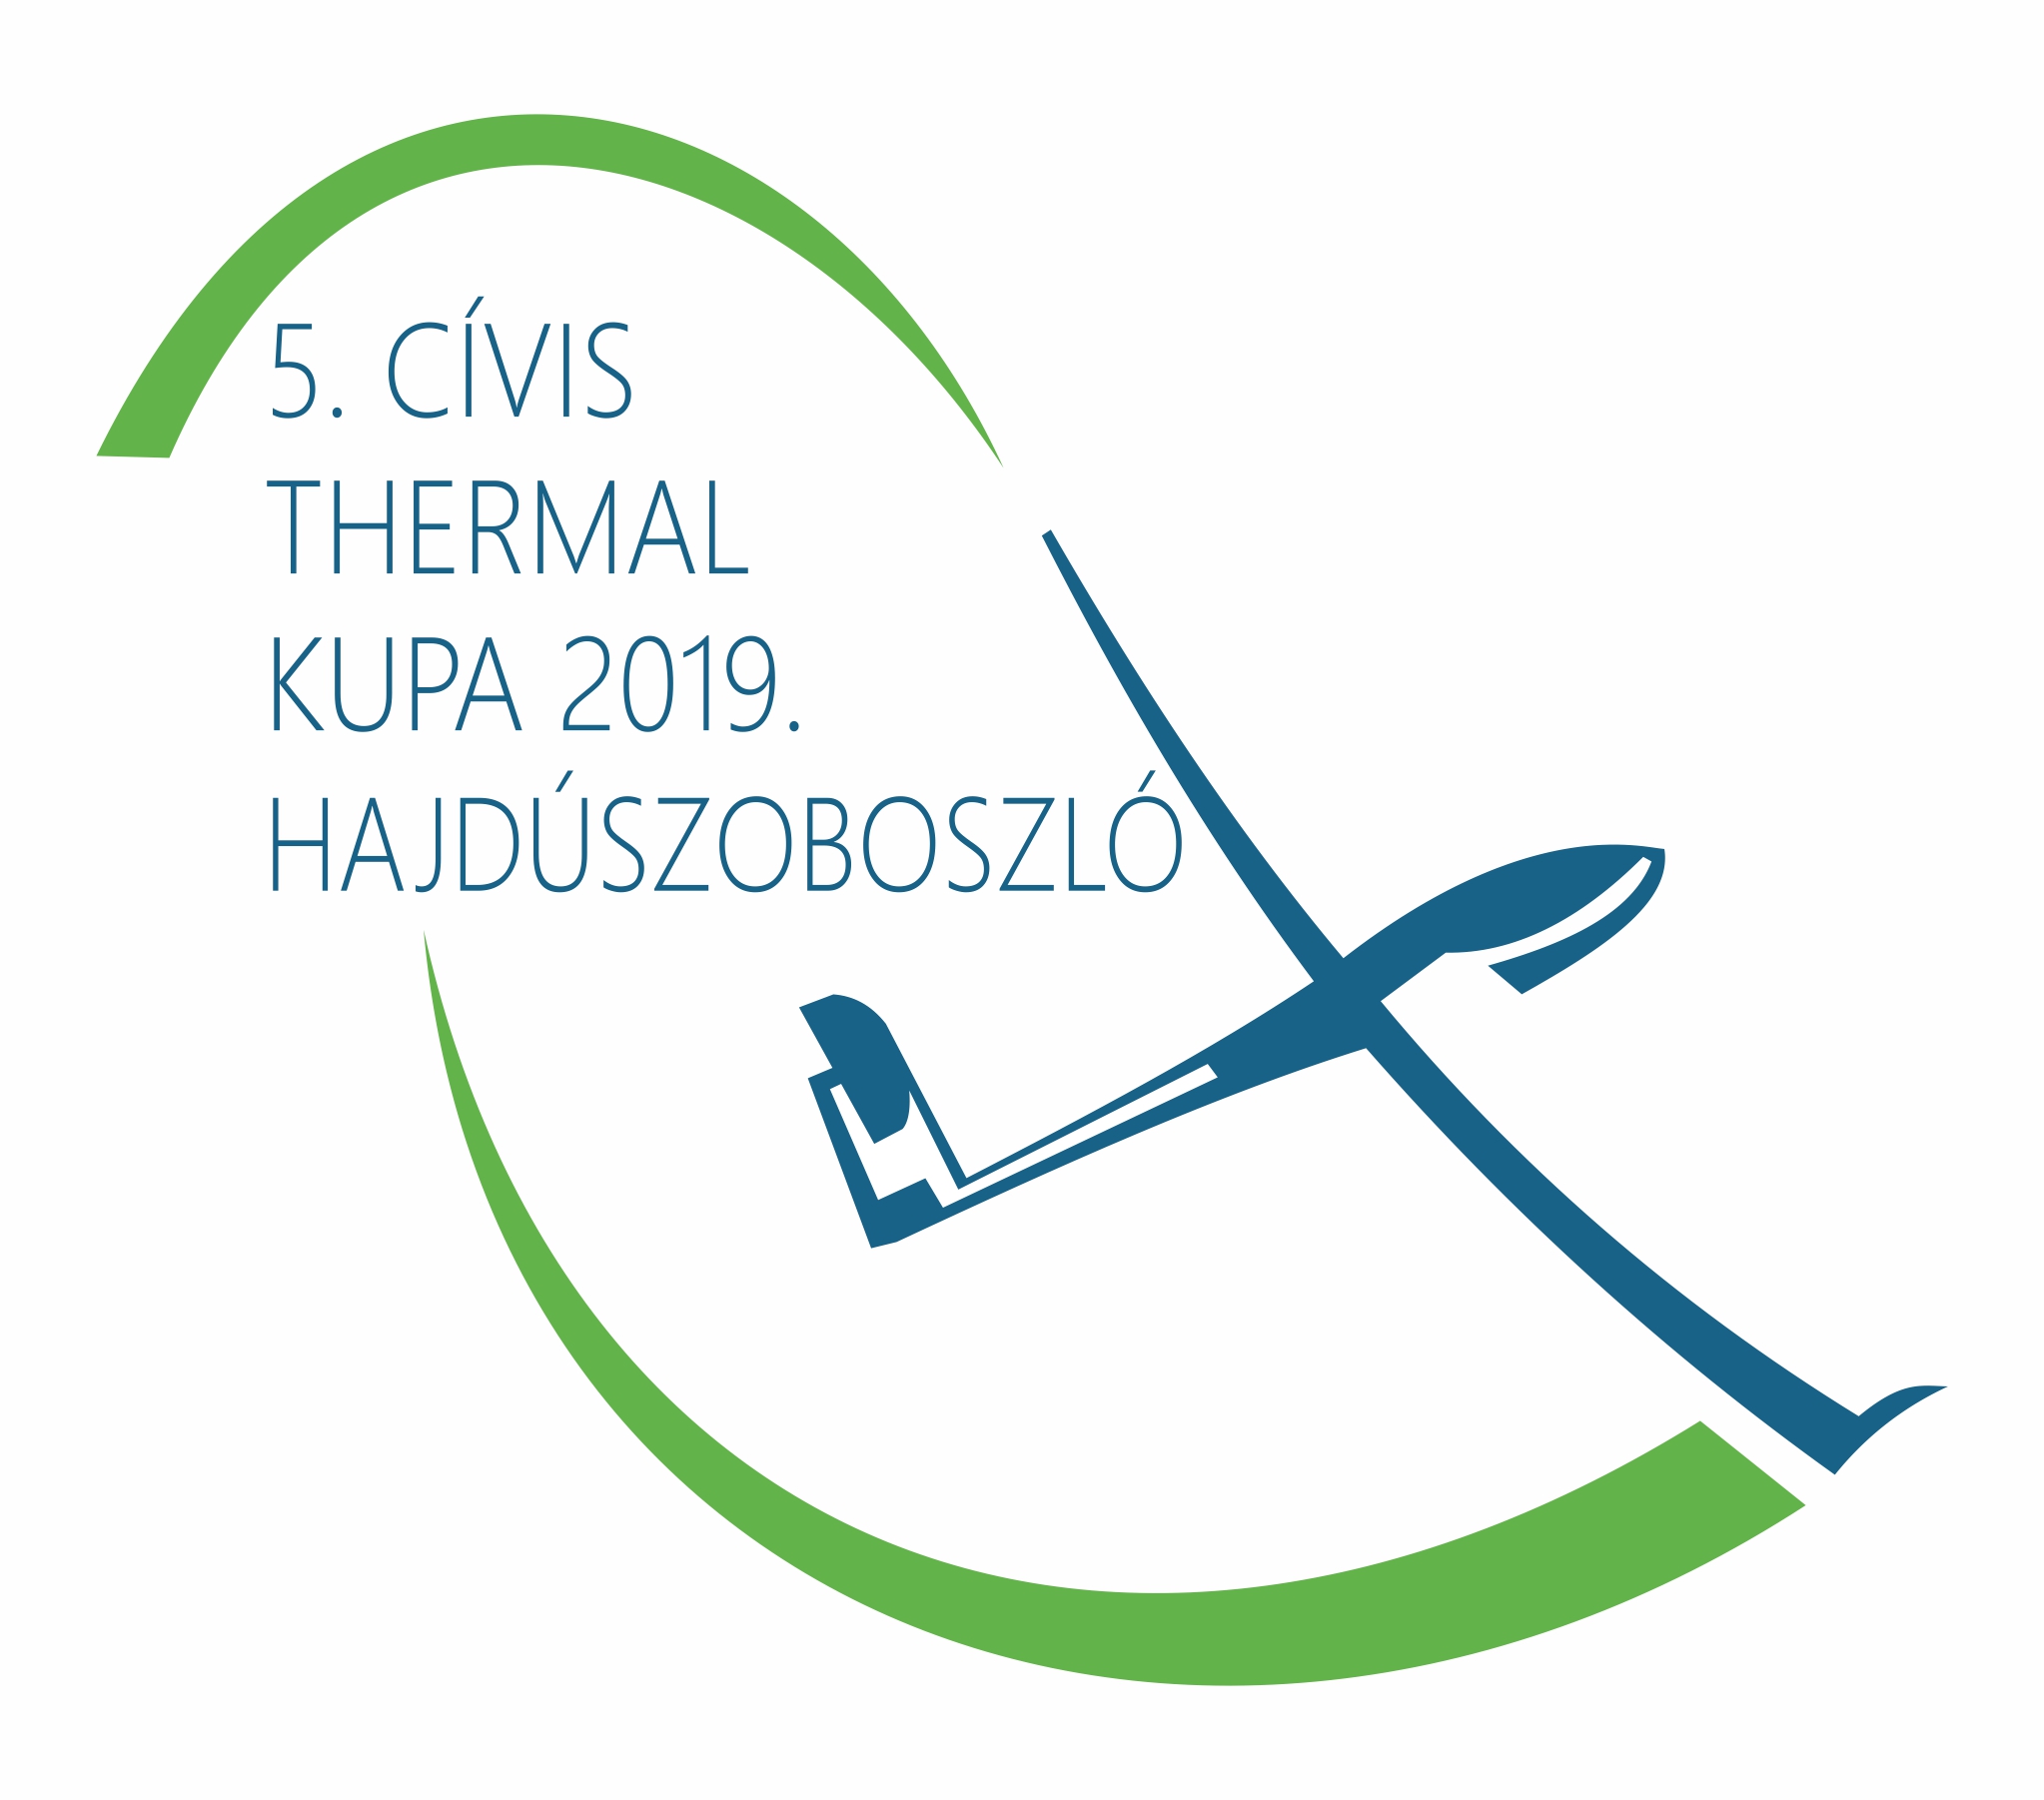 5 civistherm kupa logo 2019 web